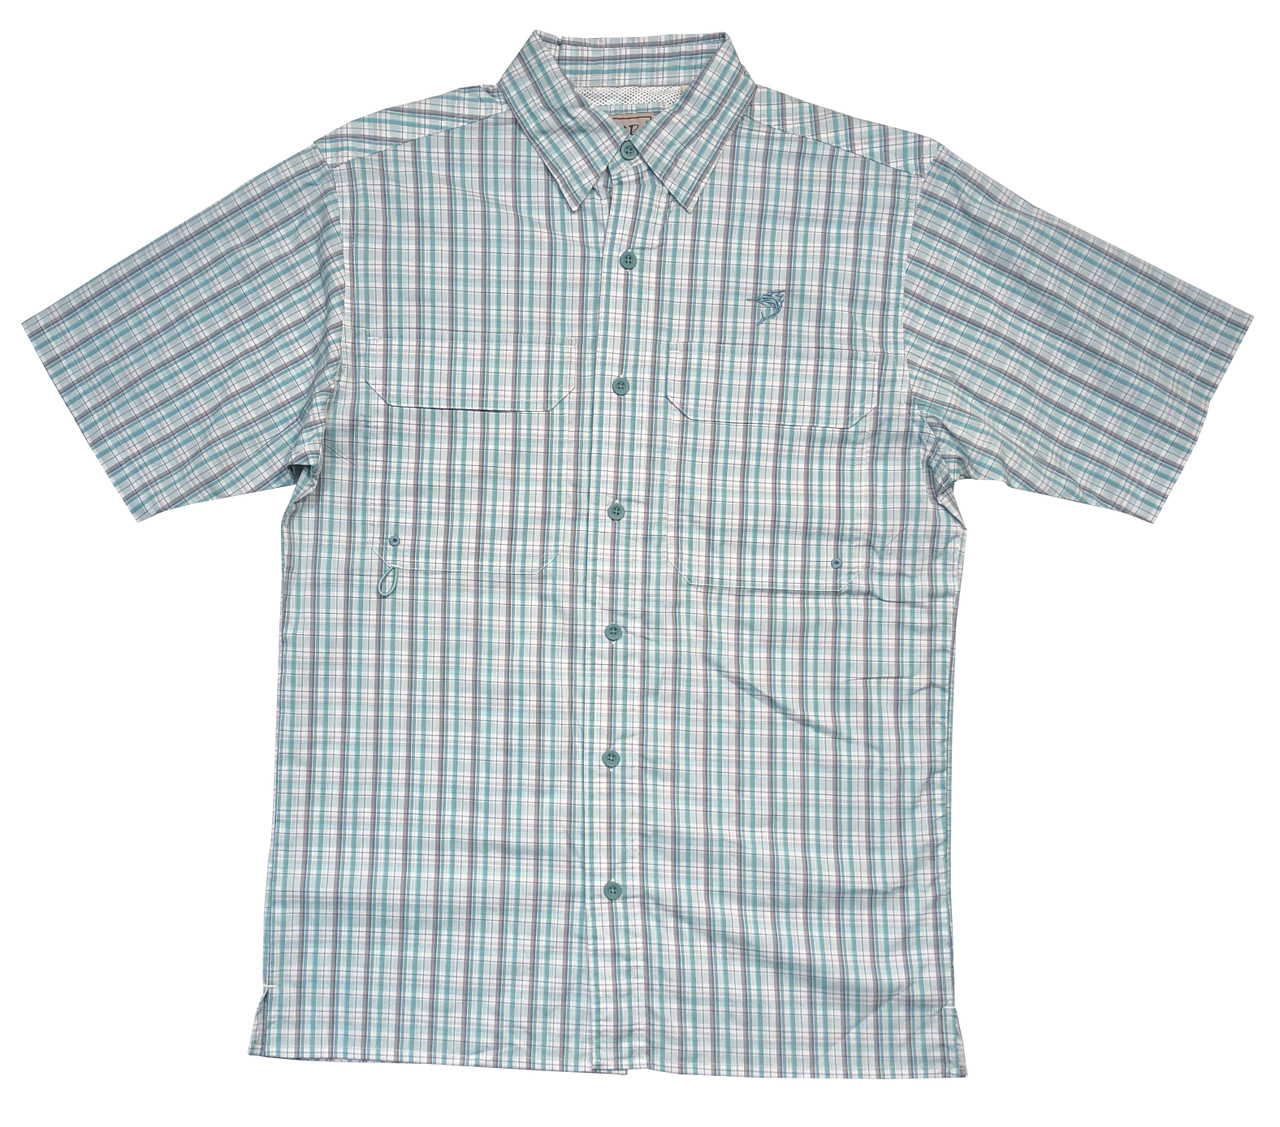 Bimini Bay Outfitters Pine Island Plaid Short Sleeve Shirt - Dick Anthony  Ltd.